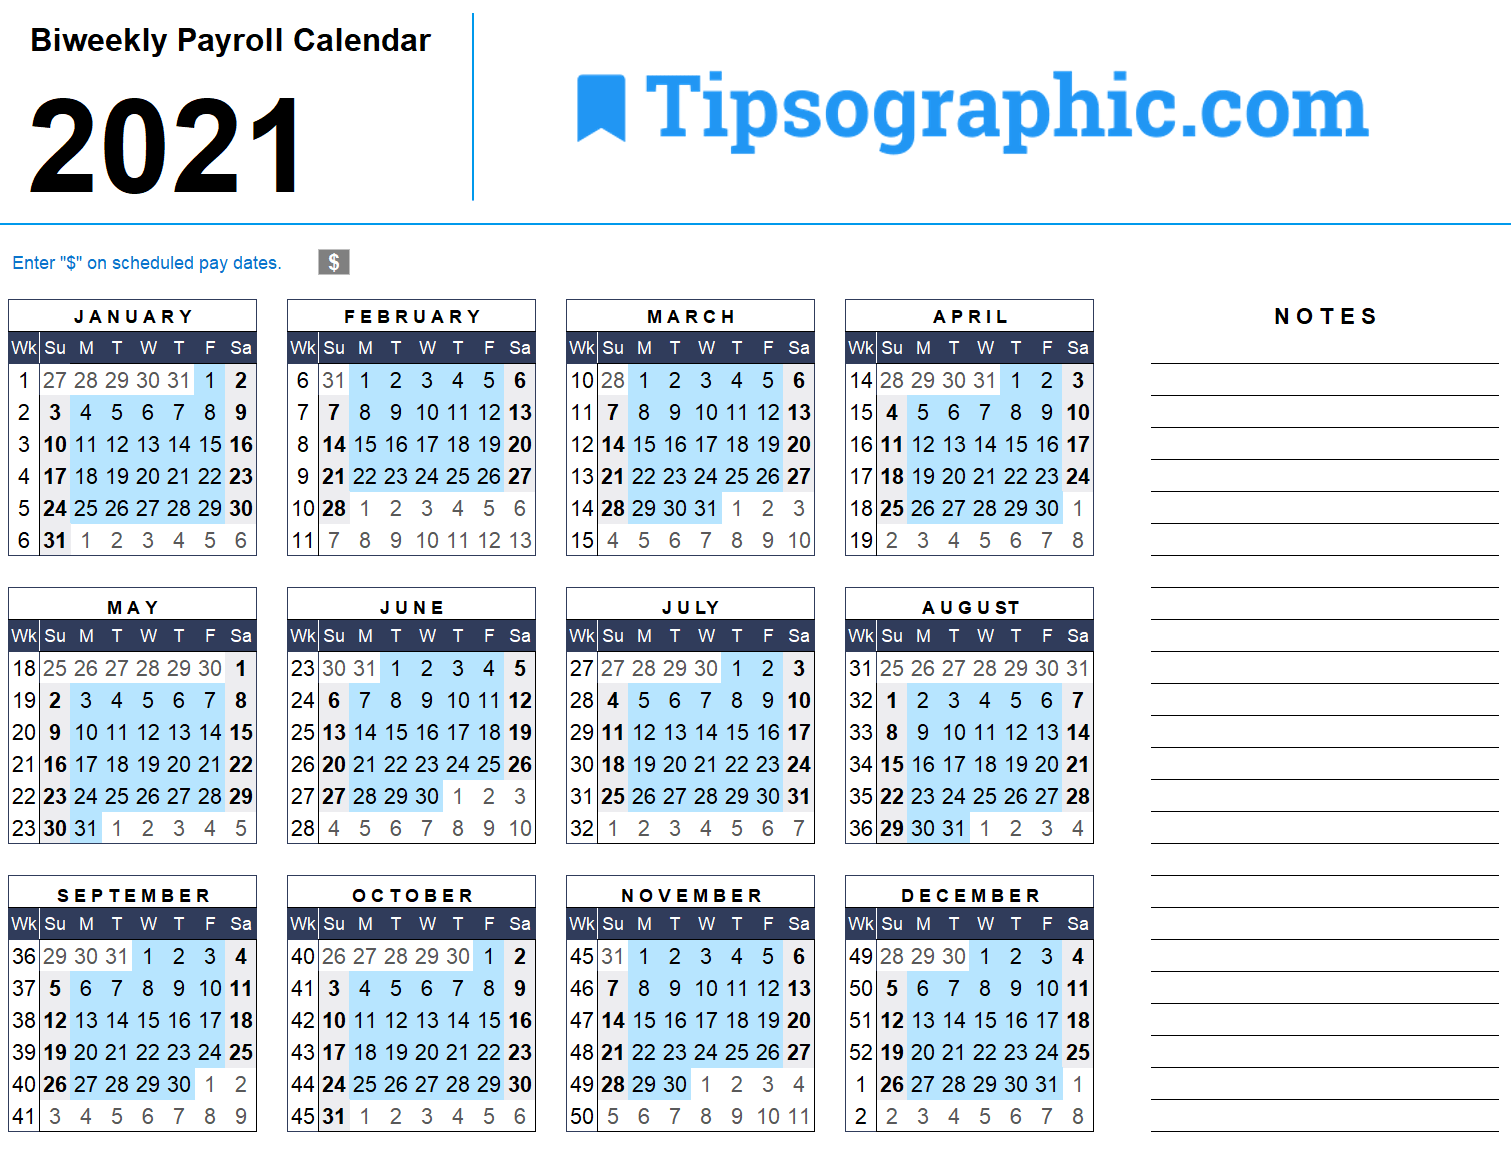 FREE DOWNLOAD > Download the 2021 Biweekly Payroll Calendar